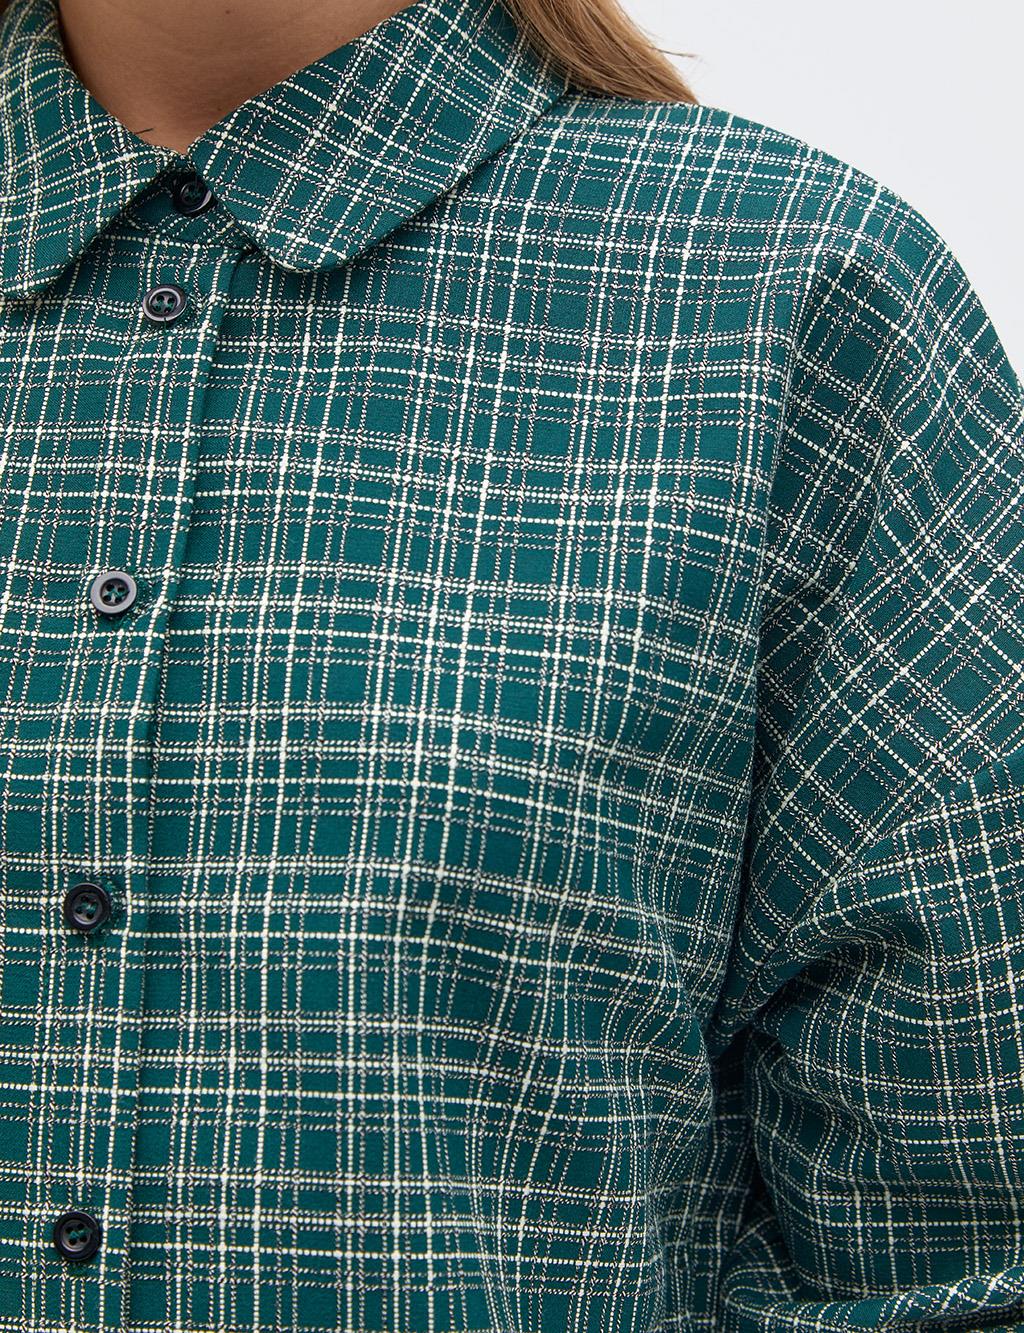 Back Detailed Plaid Shirt Emerald